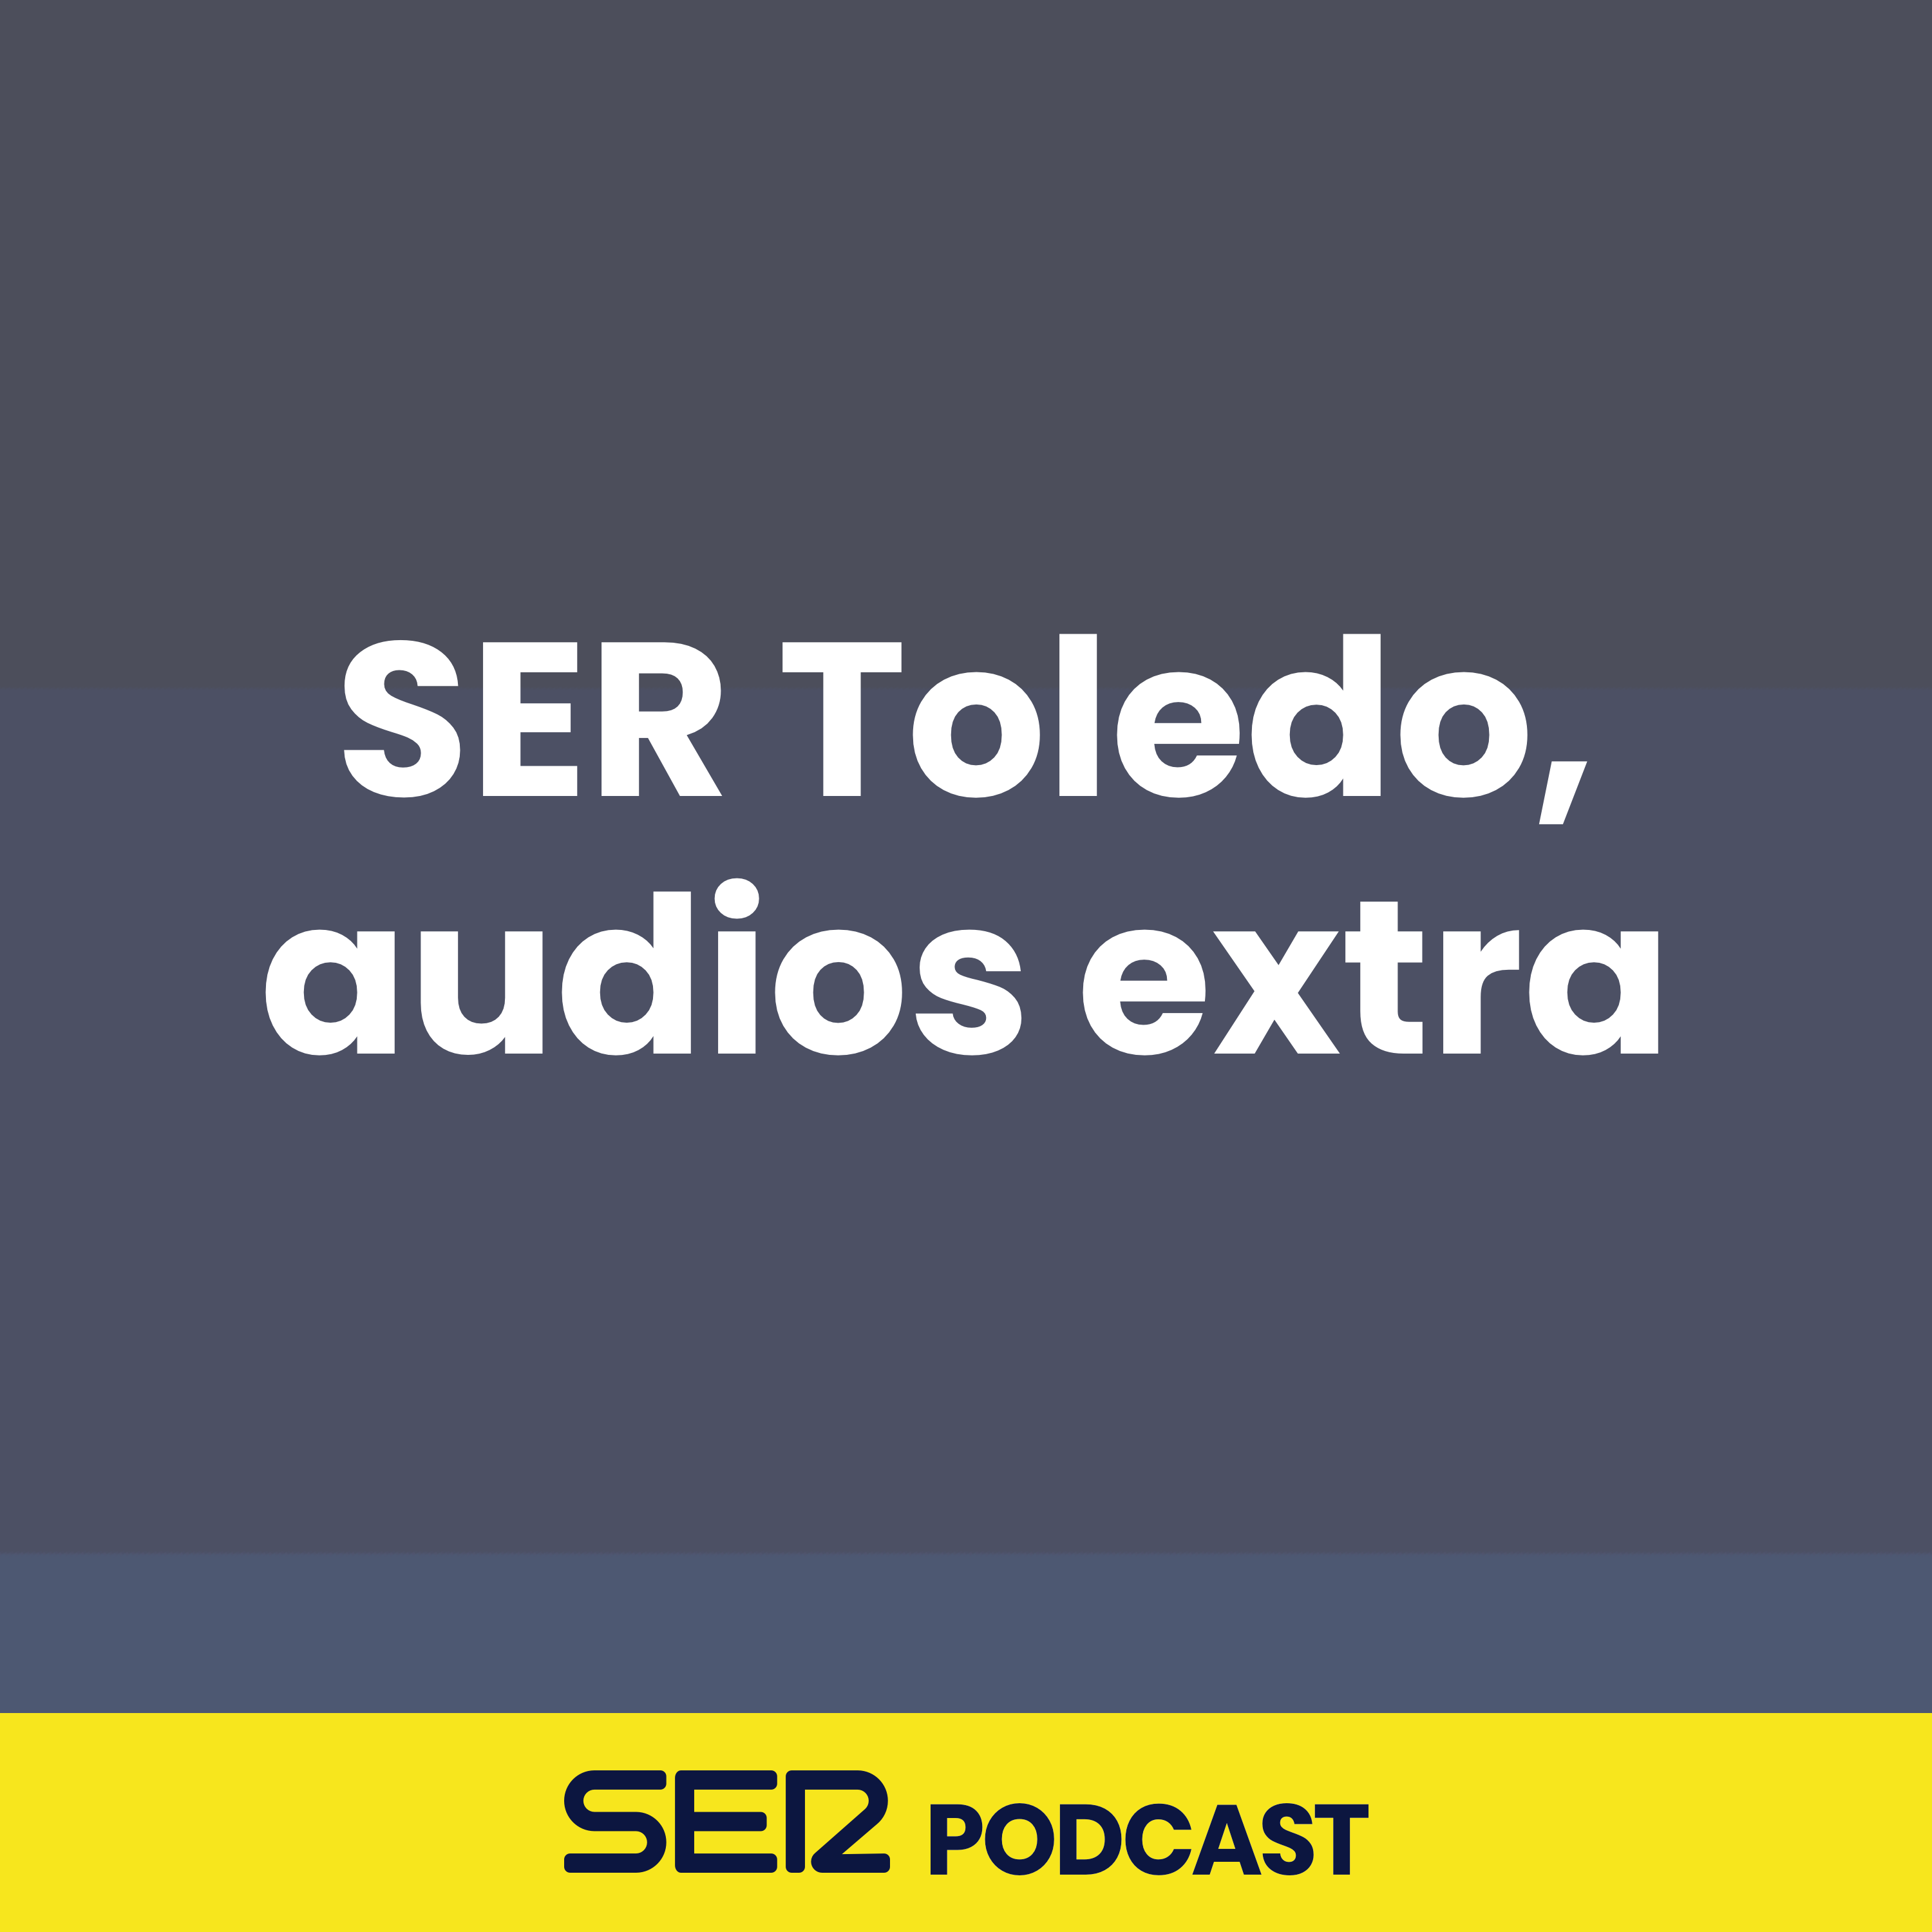 SER Toledo, audios extra